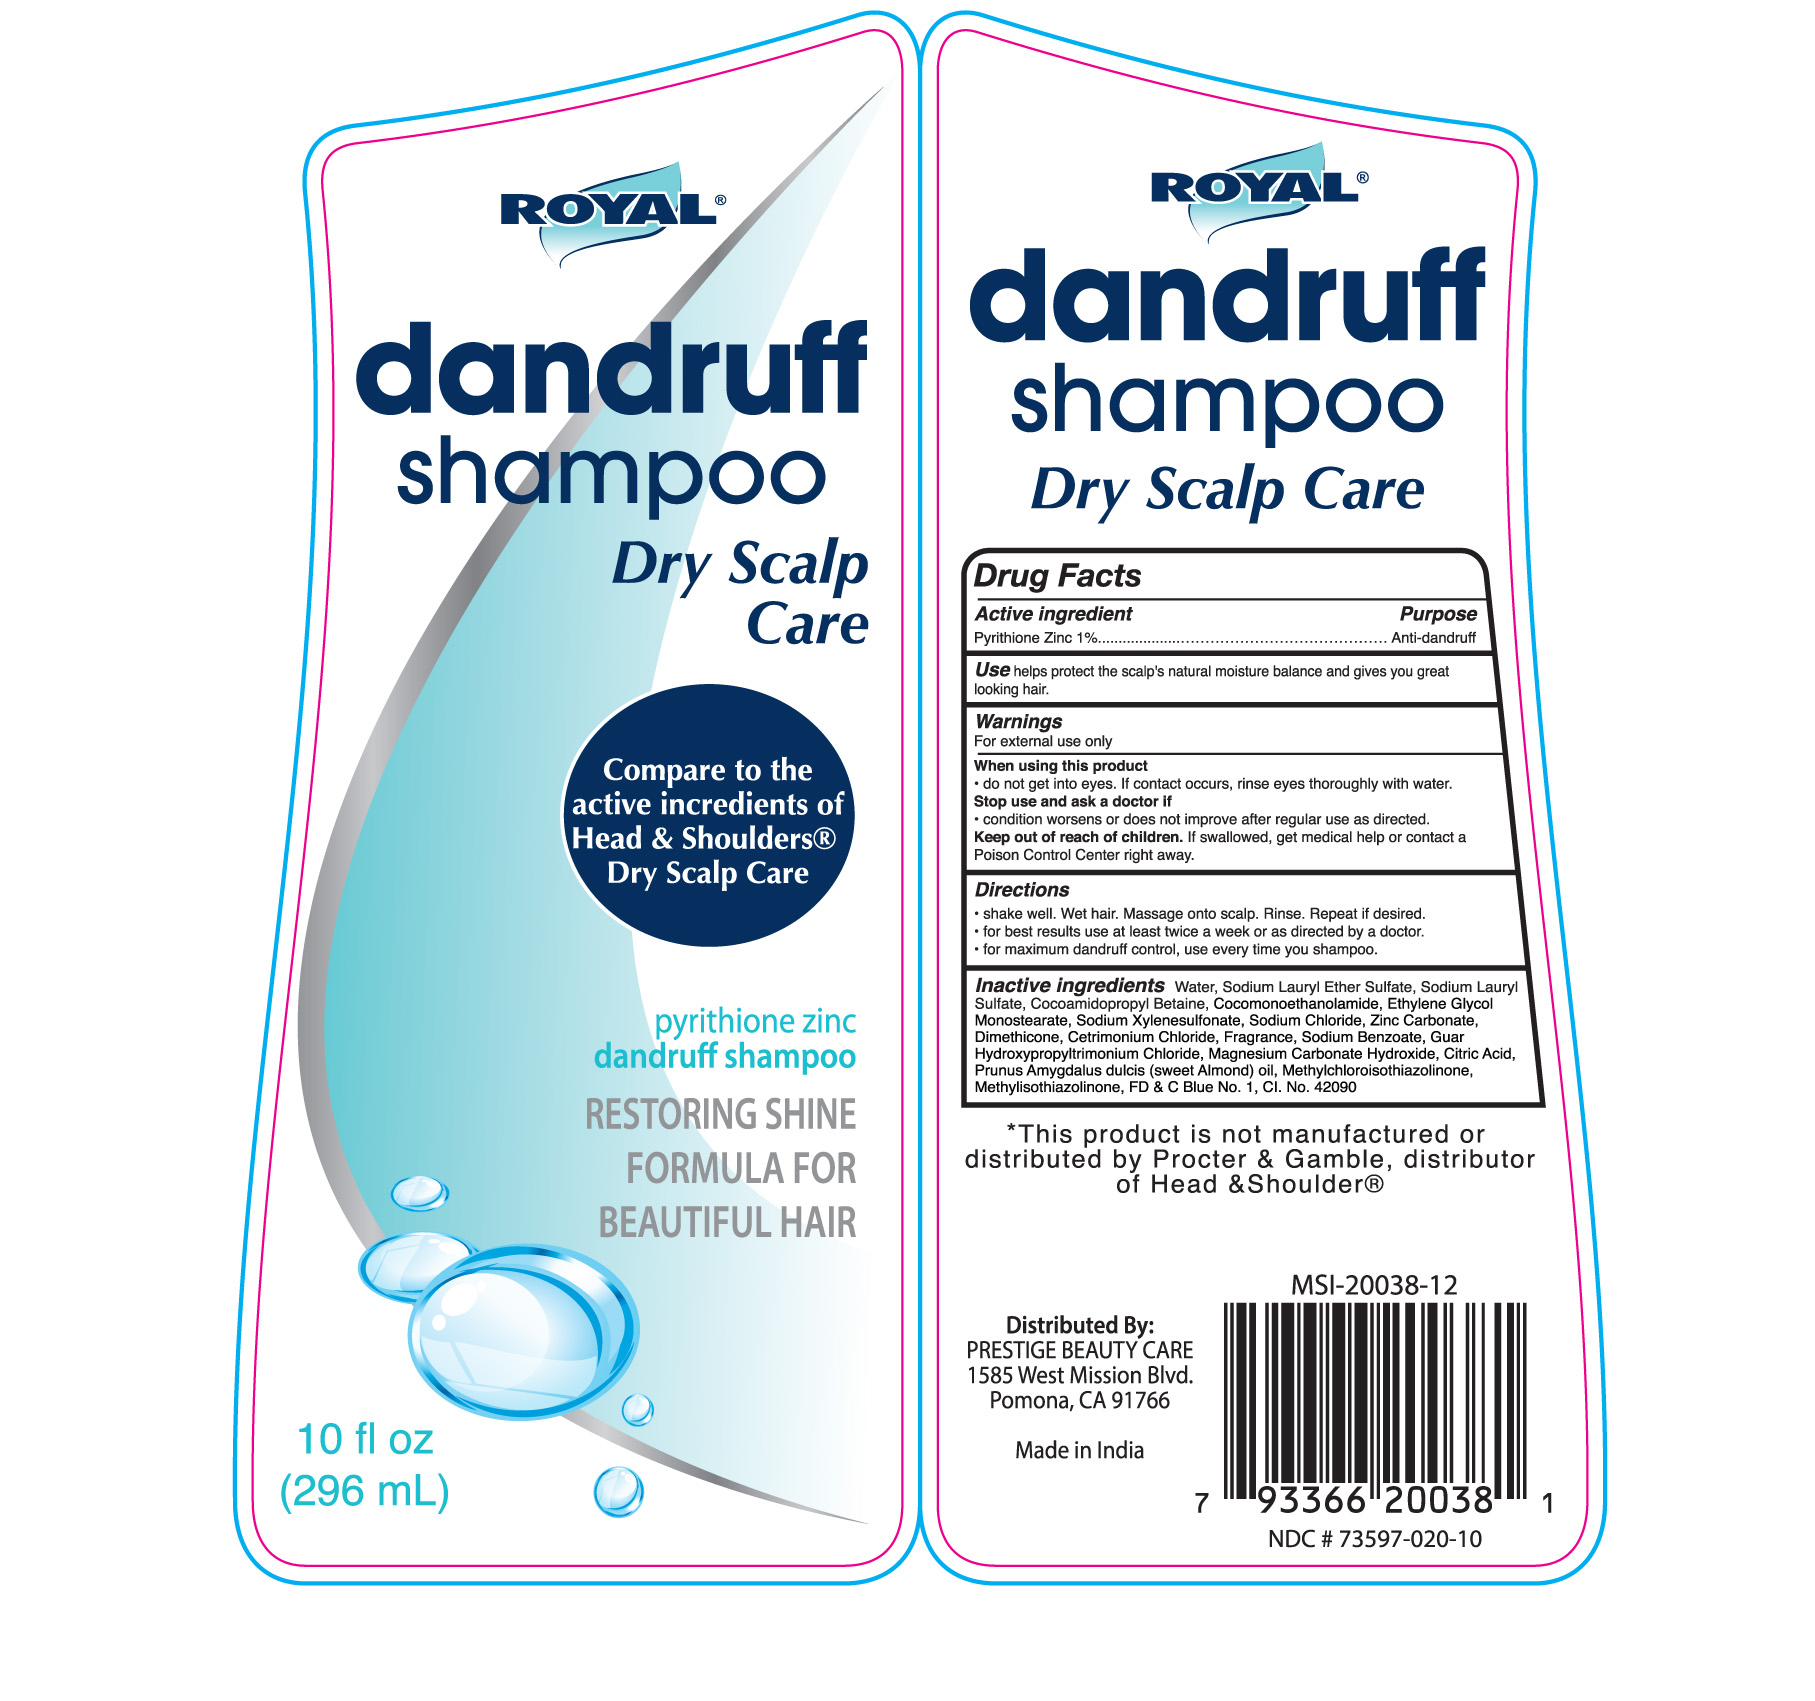 Royal Dandruff Dry Scalp